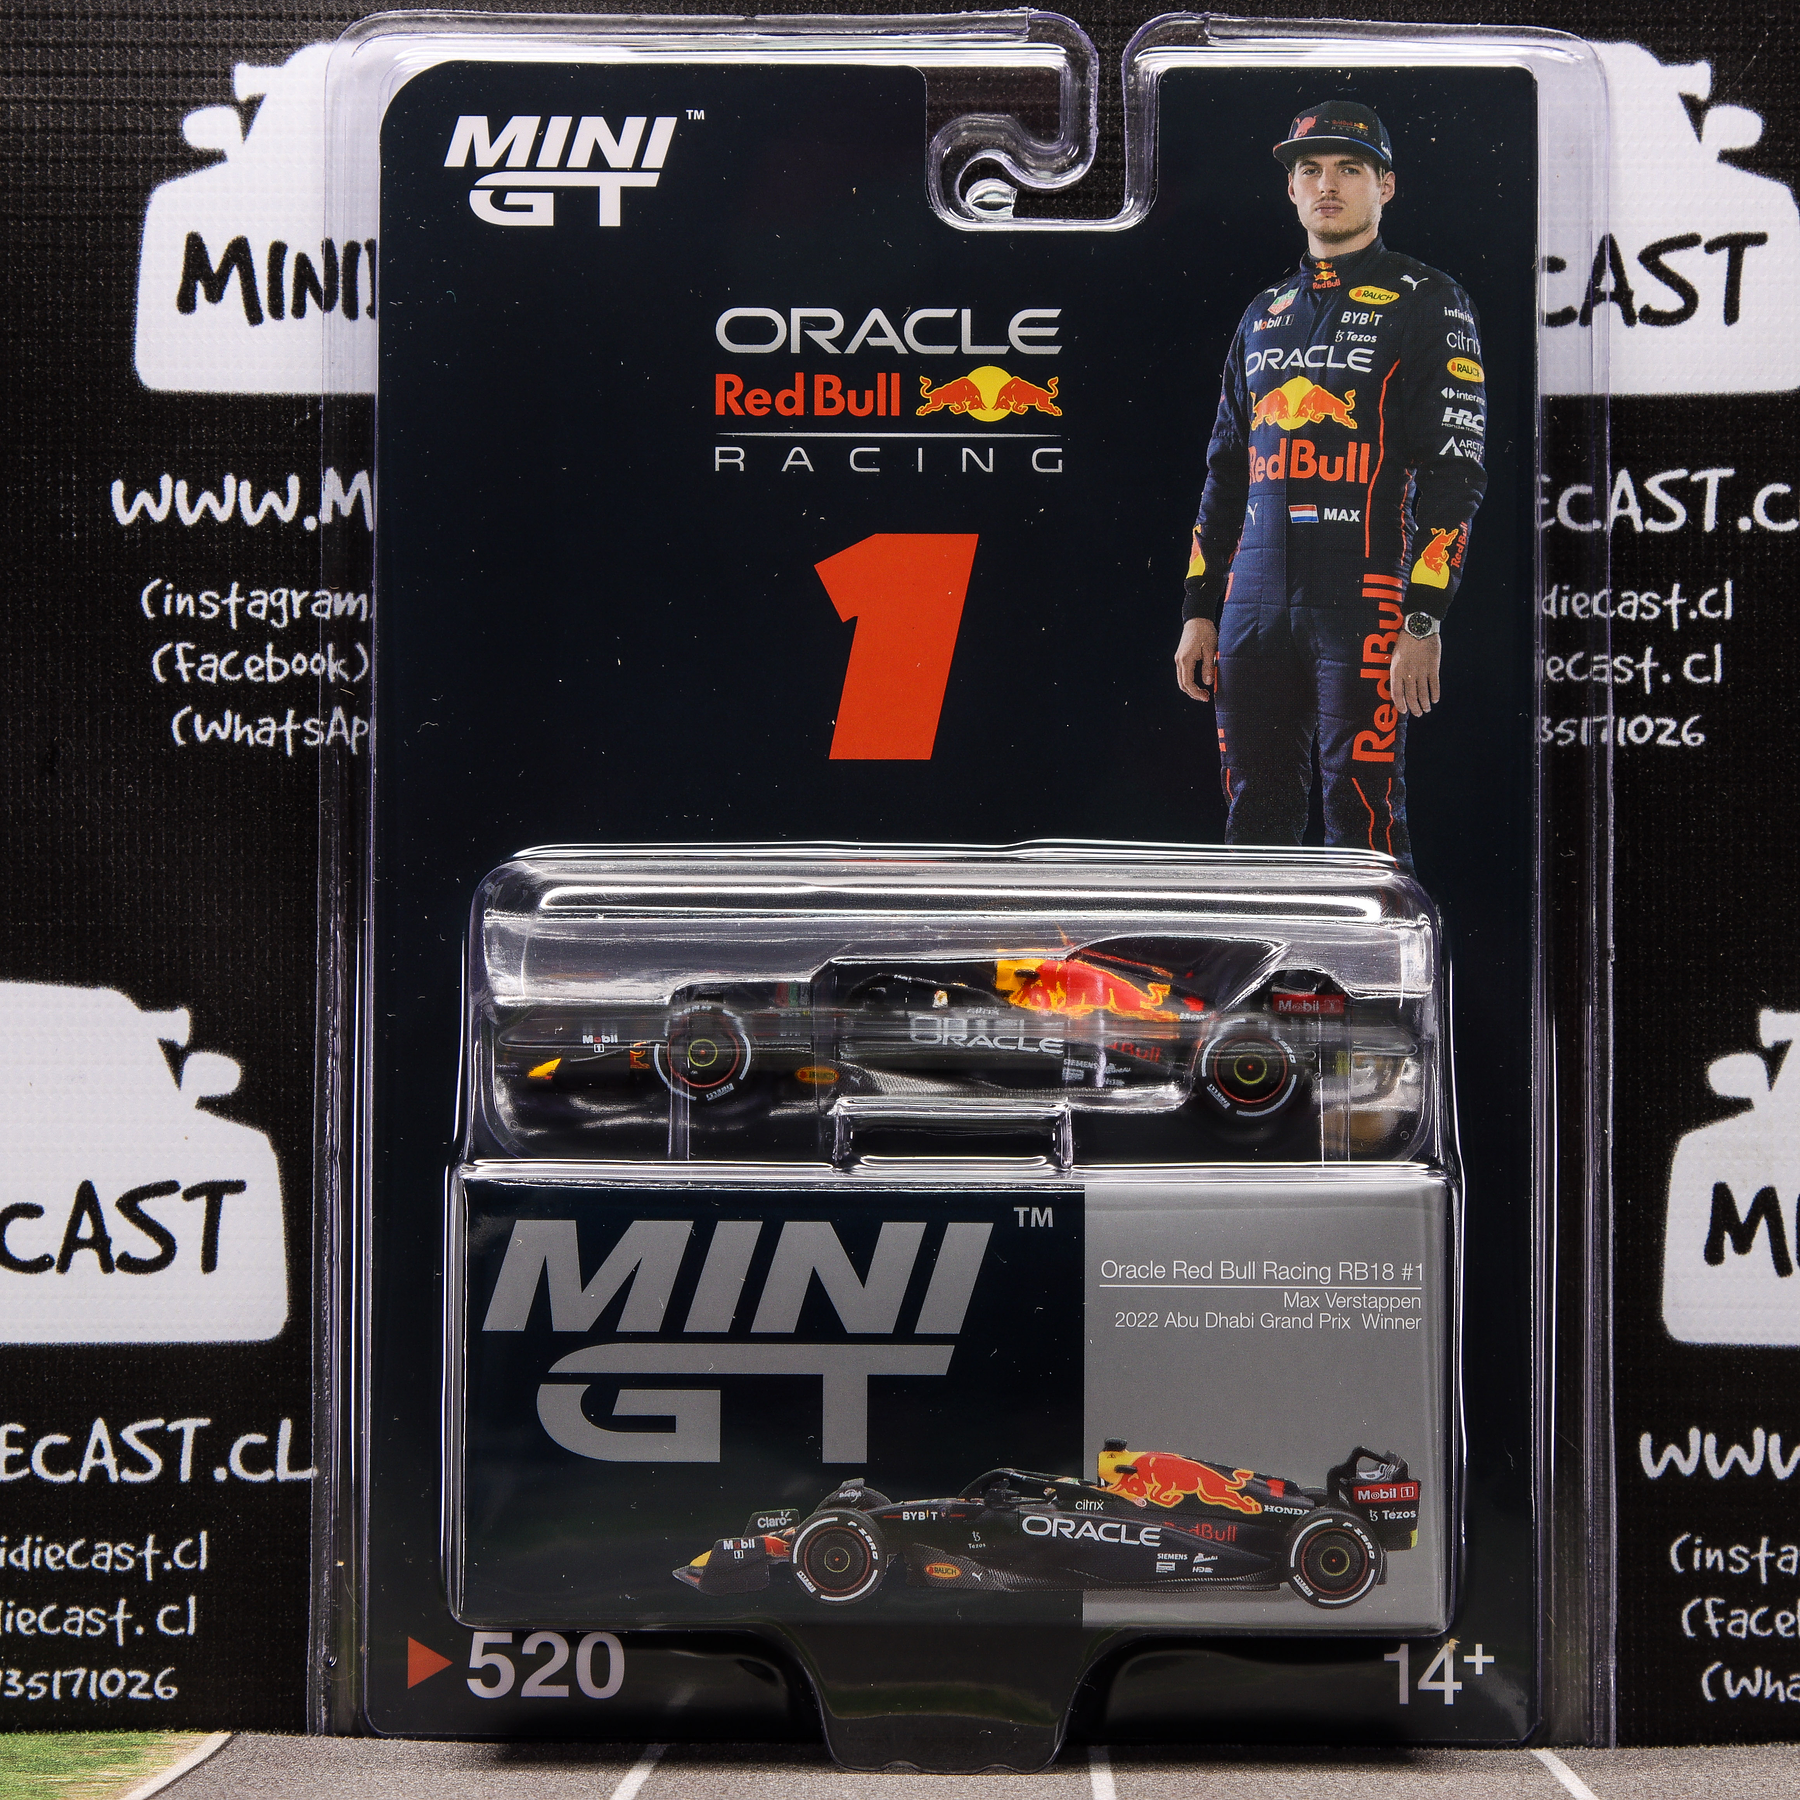 Mini GT 1:64 F1 Oracle #1 Red Bull Racing RB18 Max Verstappen 2022 Abu Dhabi Grand Prix Winner